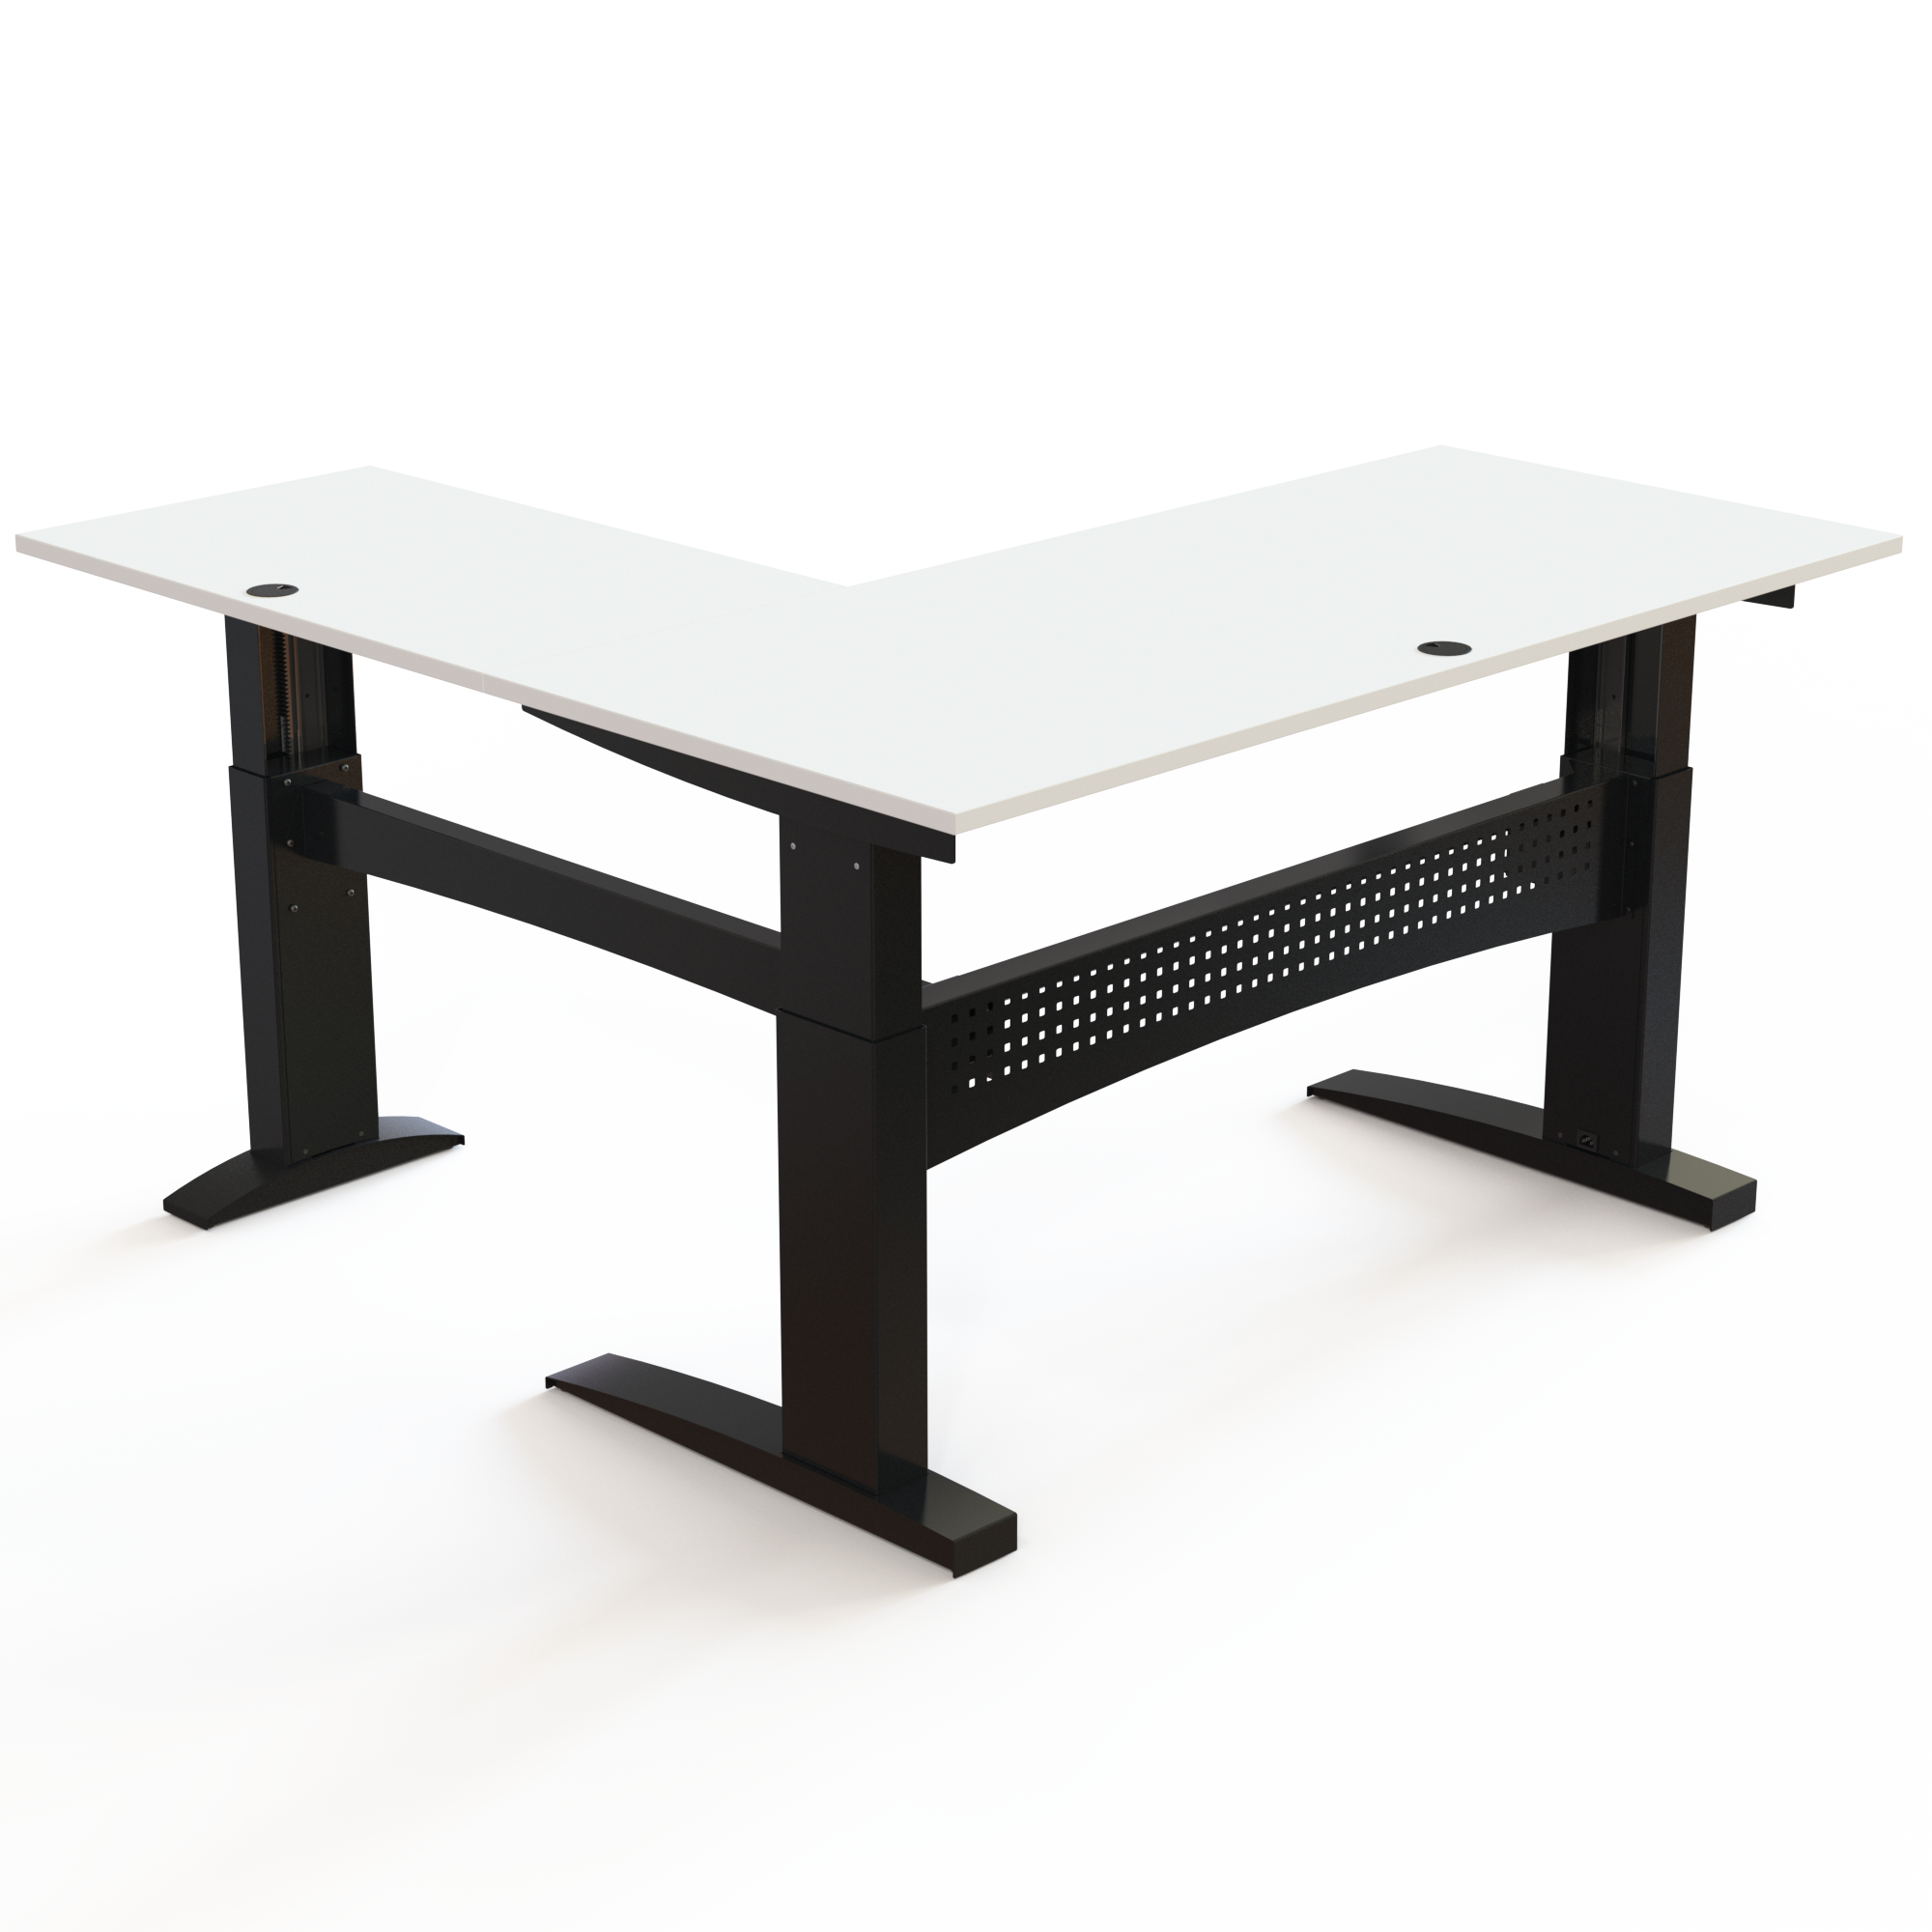 Electric Adjustable Desk | 180x180 cm | White with black frame